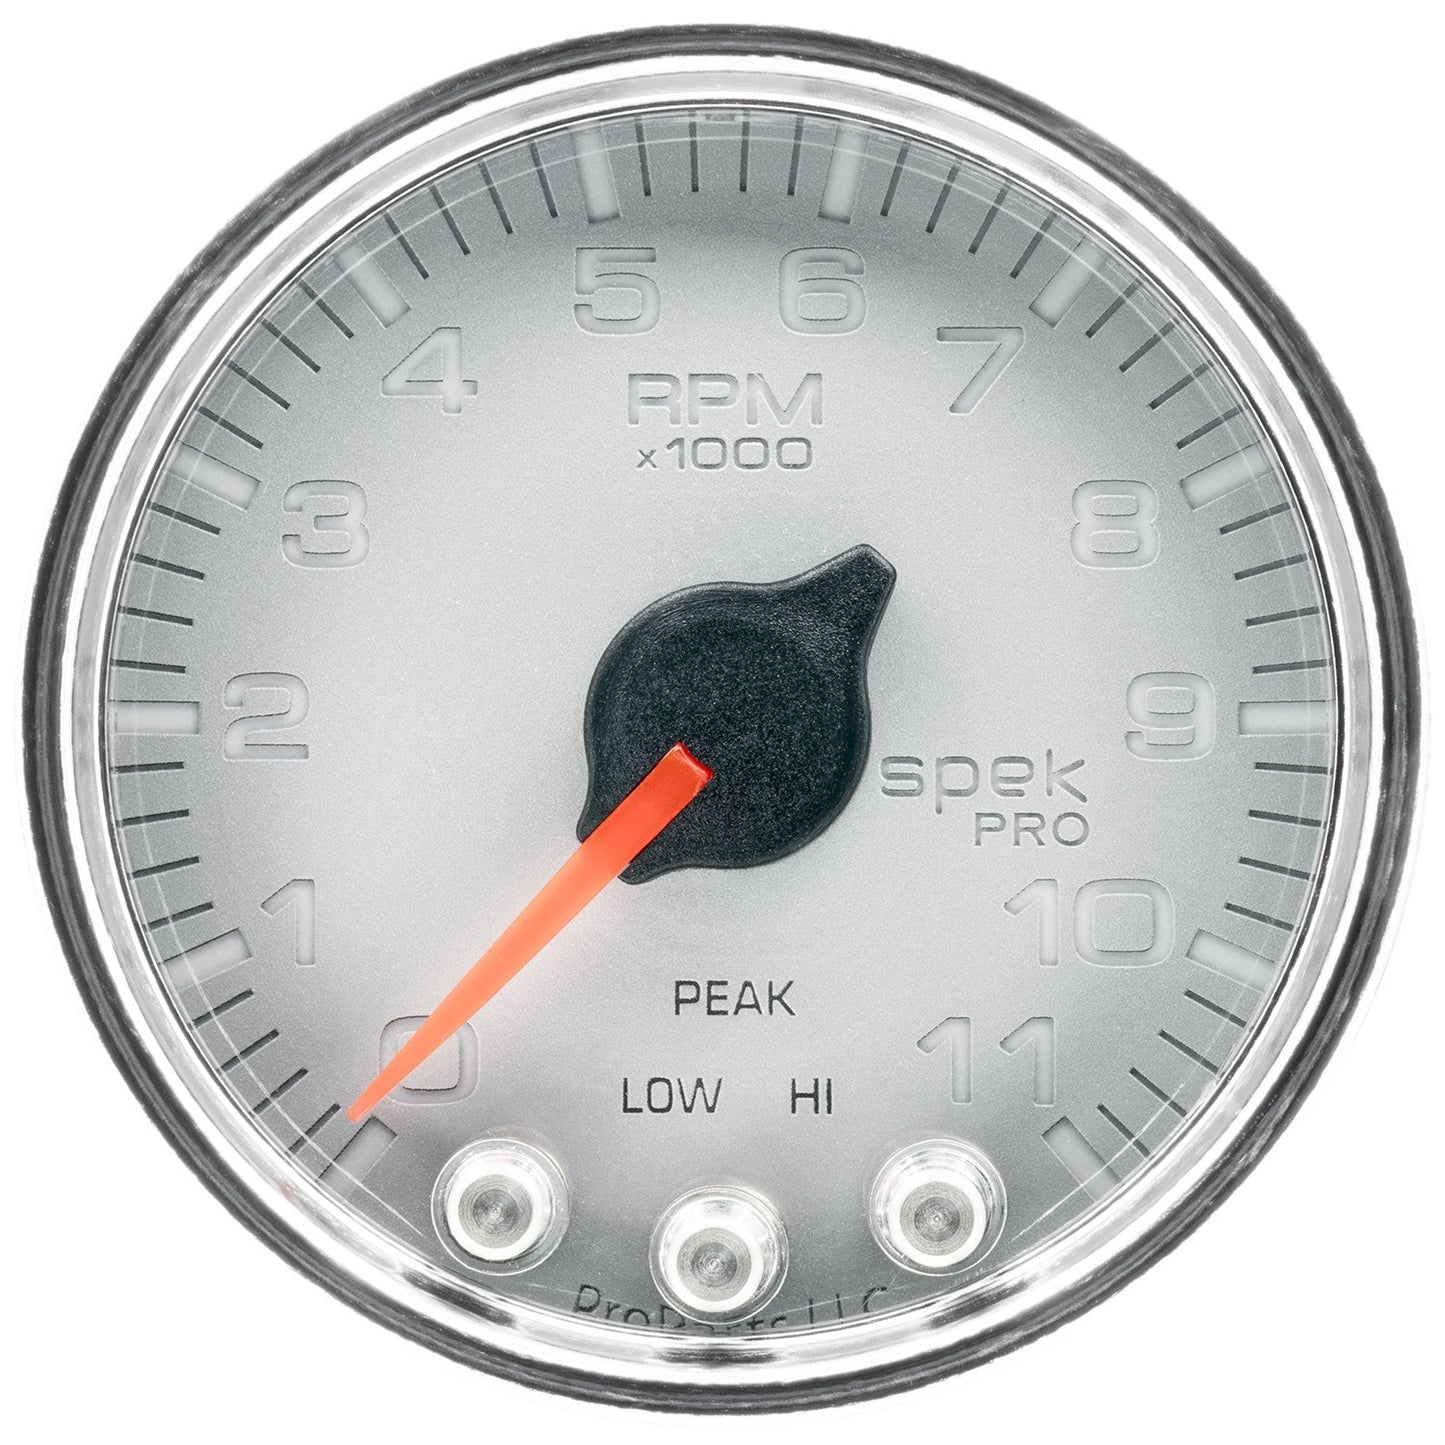 AutoMeter - 2-1/16" IN-DASH TACHOMETER, 0-11,000 RPM, SPEK-PRO, SILVER DIAL, CHROME BEZEL, CLEAR LENS  (P33621)